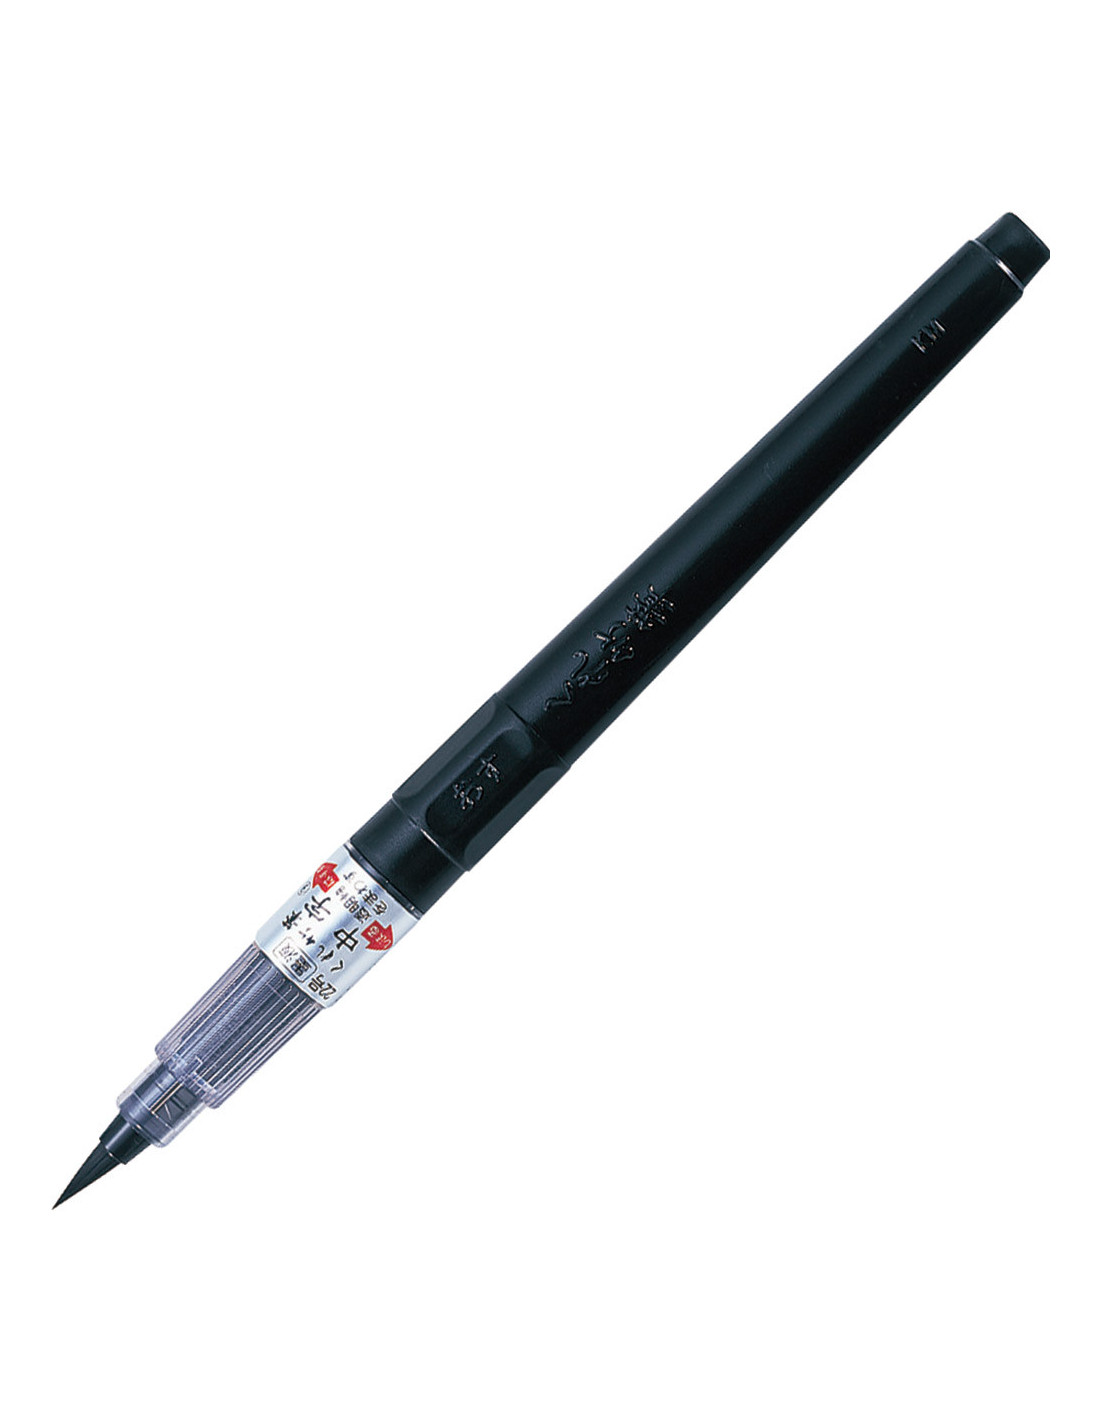 Kuretake Brush Pen No. 22 - Medium